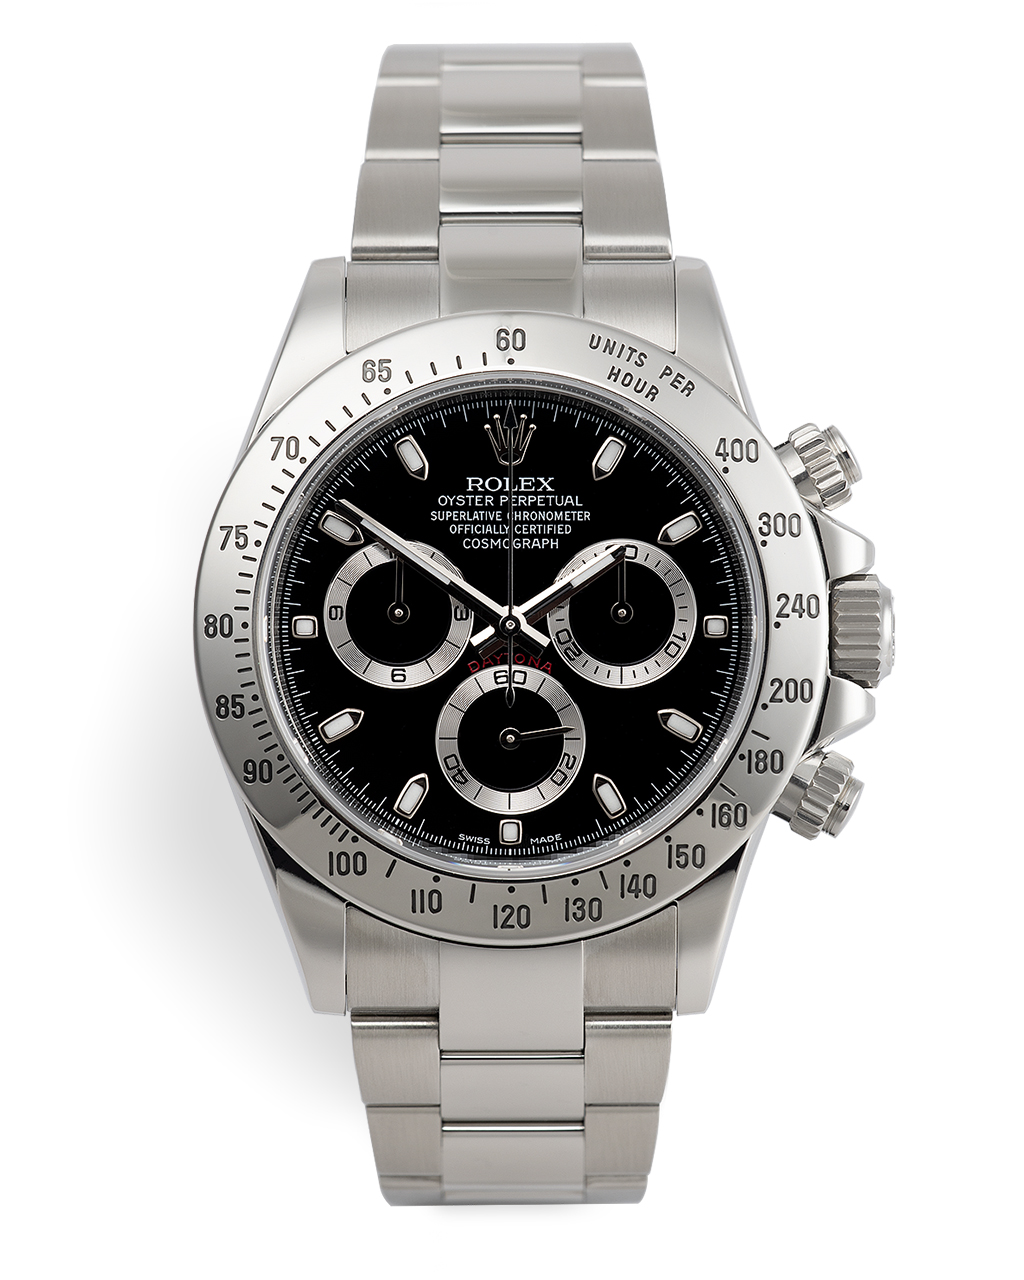 Rolex Cosmograph Daytona Watches | ref 116520 | 'Final Series 